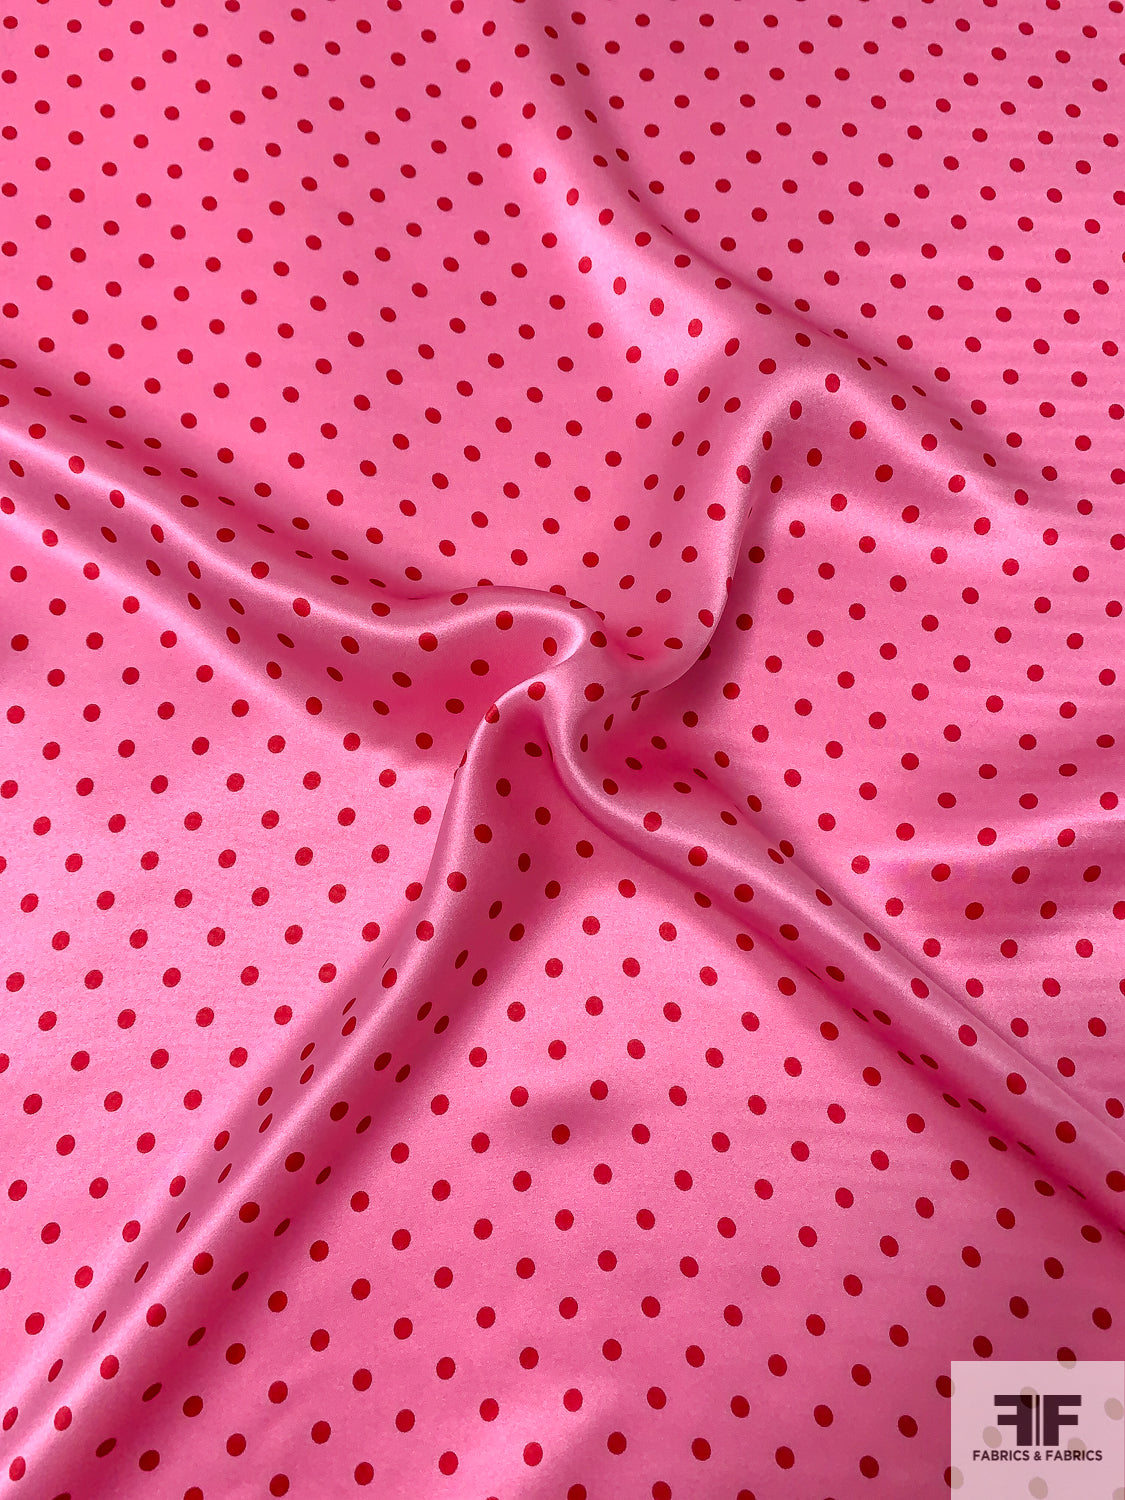 SALE Polka Dot Satin Fabric 7902 Fuschia-Pink, by the yard